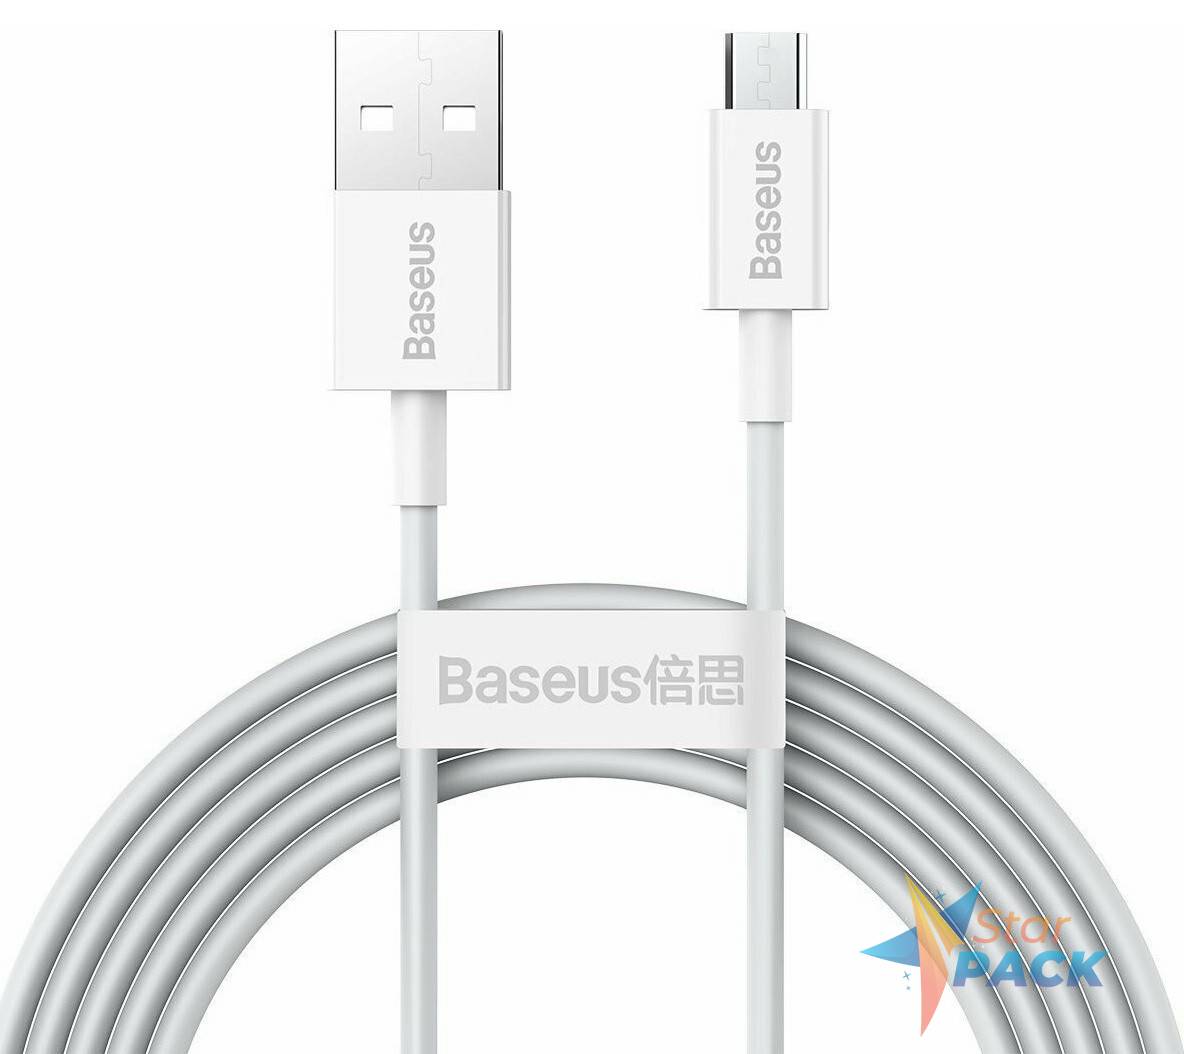 CABLU alimentare si date Baseus Superior, Fast Charging Data Cable pt. smartphone, USB la Micro-USB 2A, 2m, alb  - 6953156208506